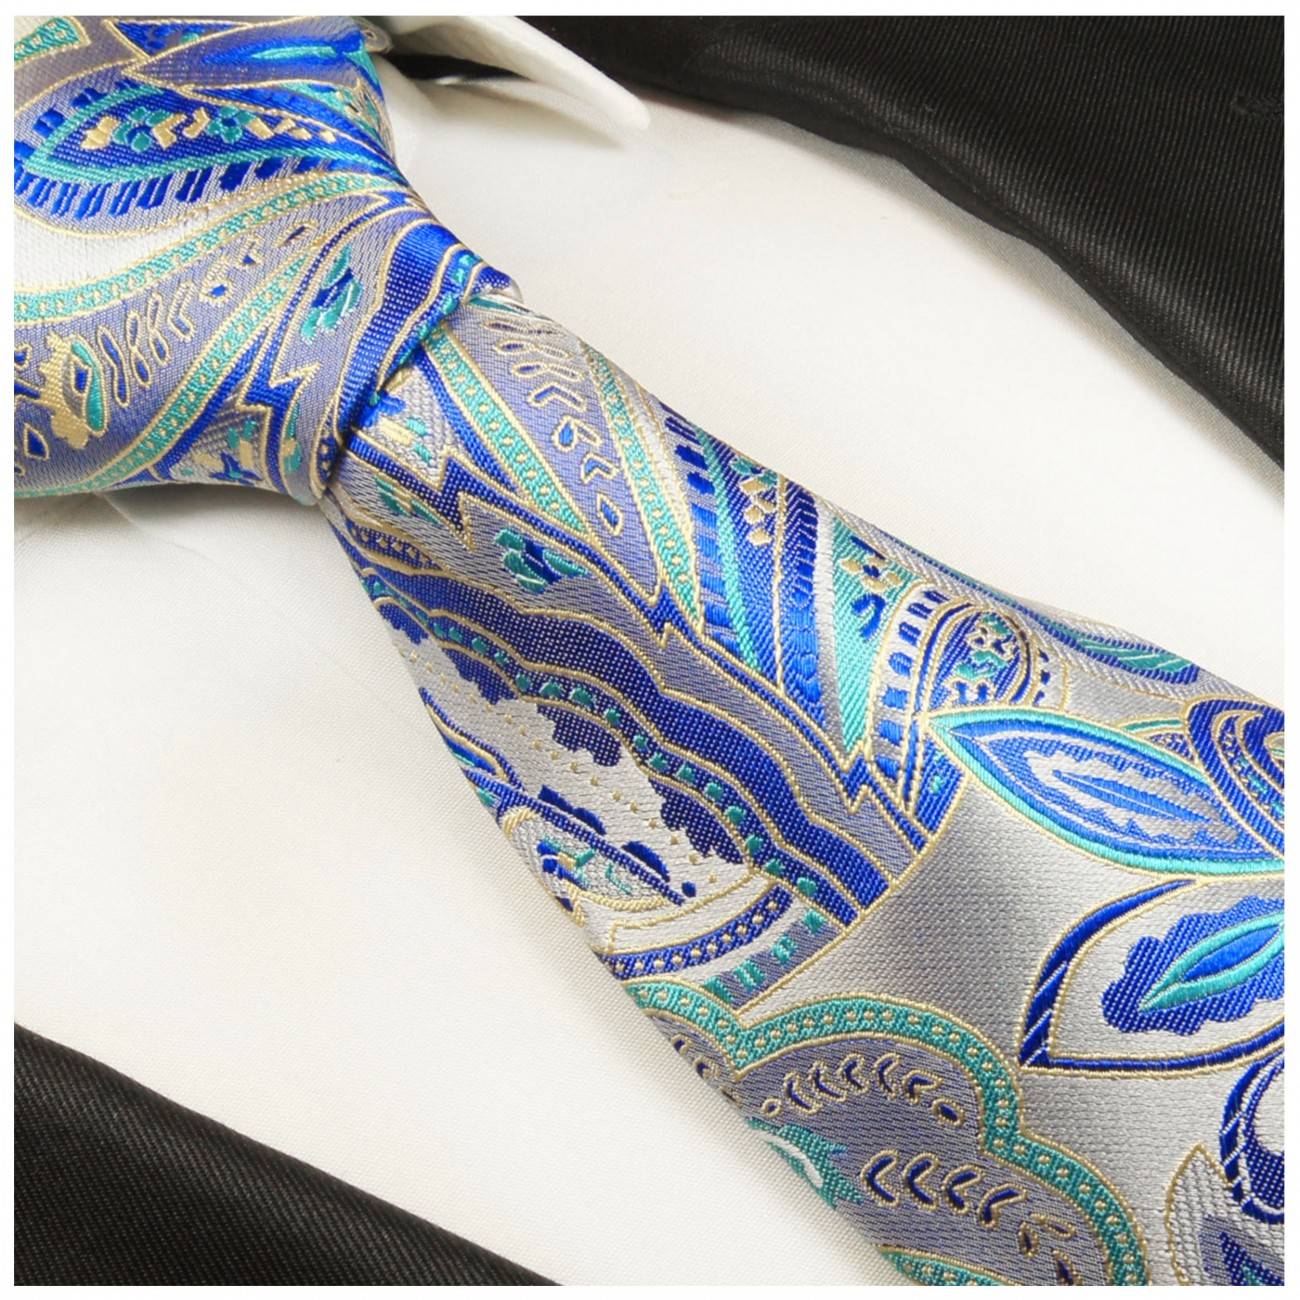 Krawatte silber blau paisley brokat 2019